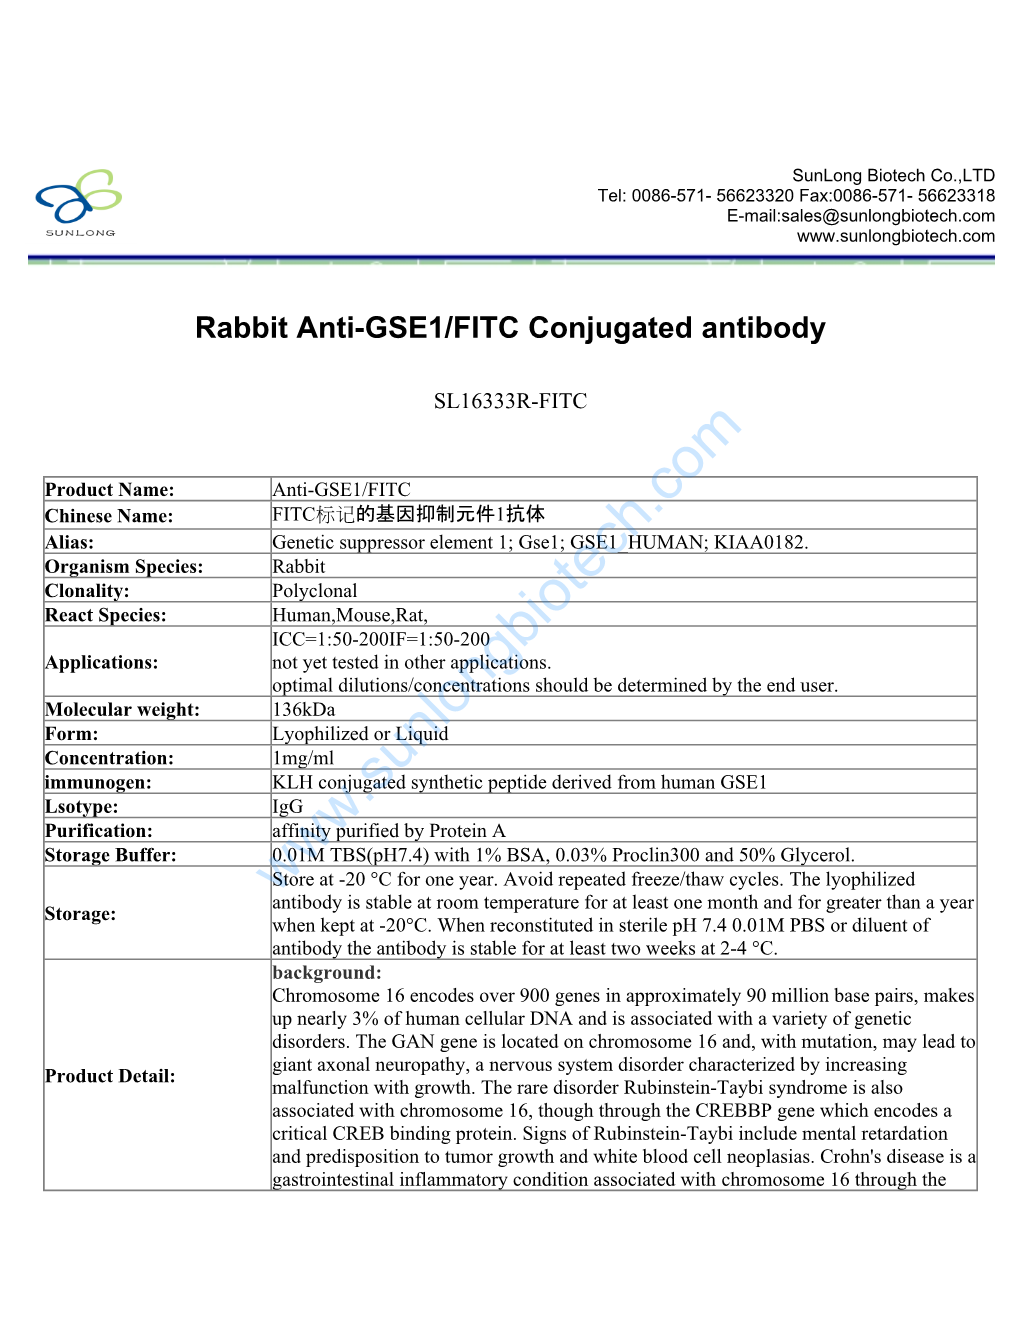 Rabbit Anti-GSE1/FITC Conjugated Antibody-SL16333R-FITC